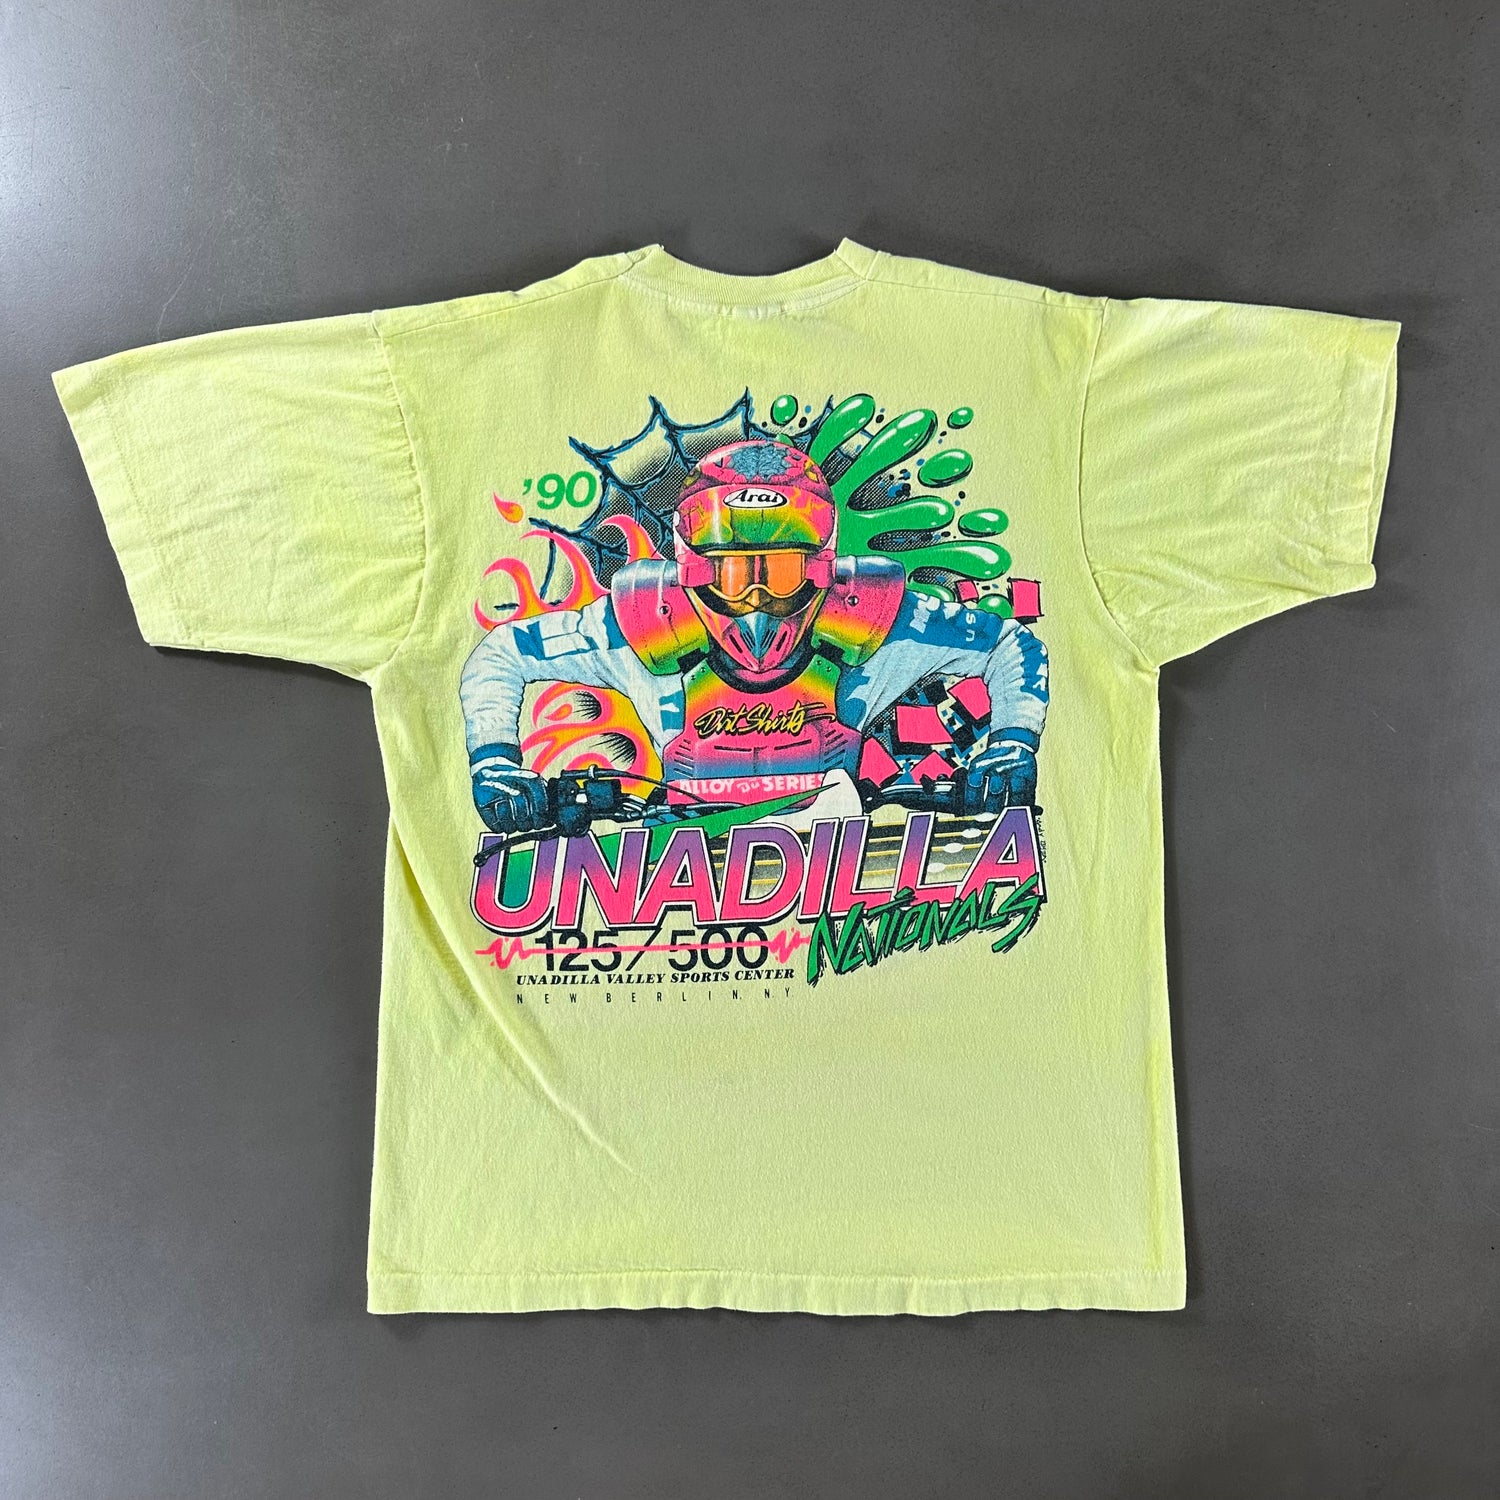 Vintage 1990s Dirt Shirts T-shirt size Large